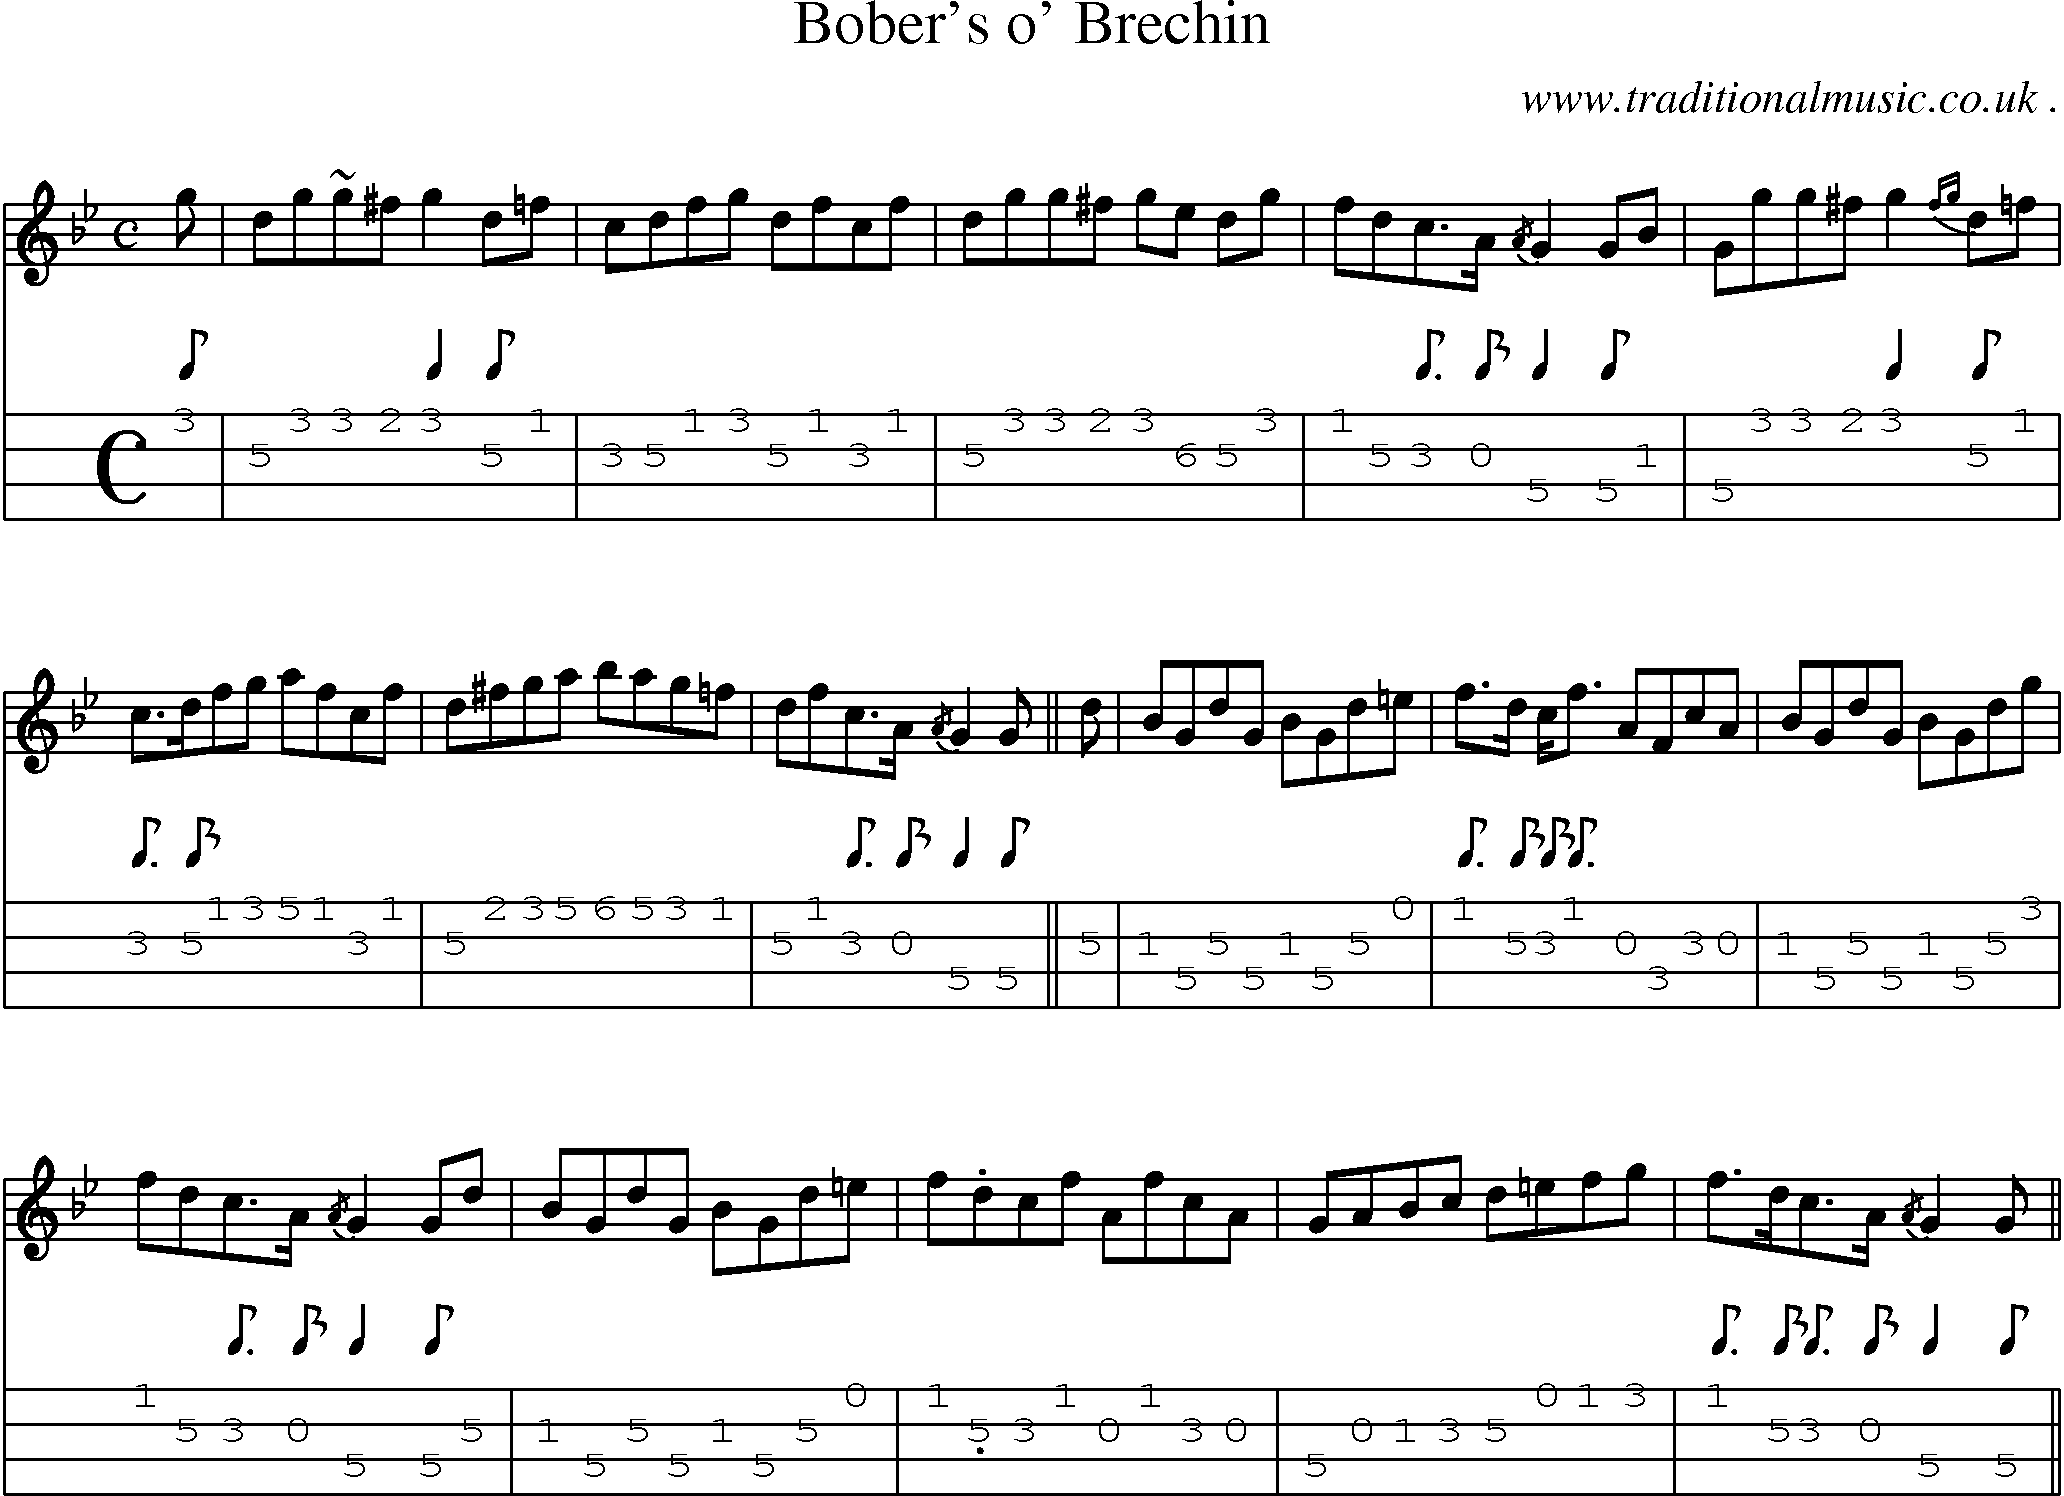 Sheet-music  score, Chords and Mandolin Tabs for Bobers O Brechin